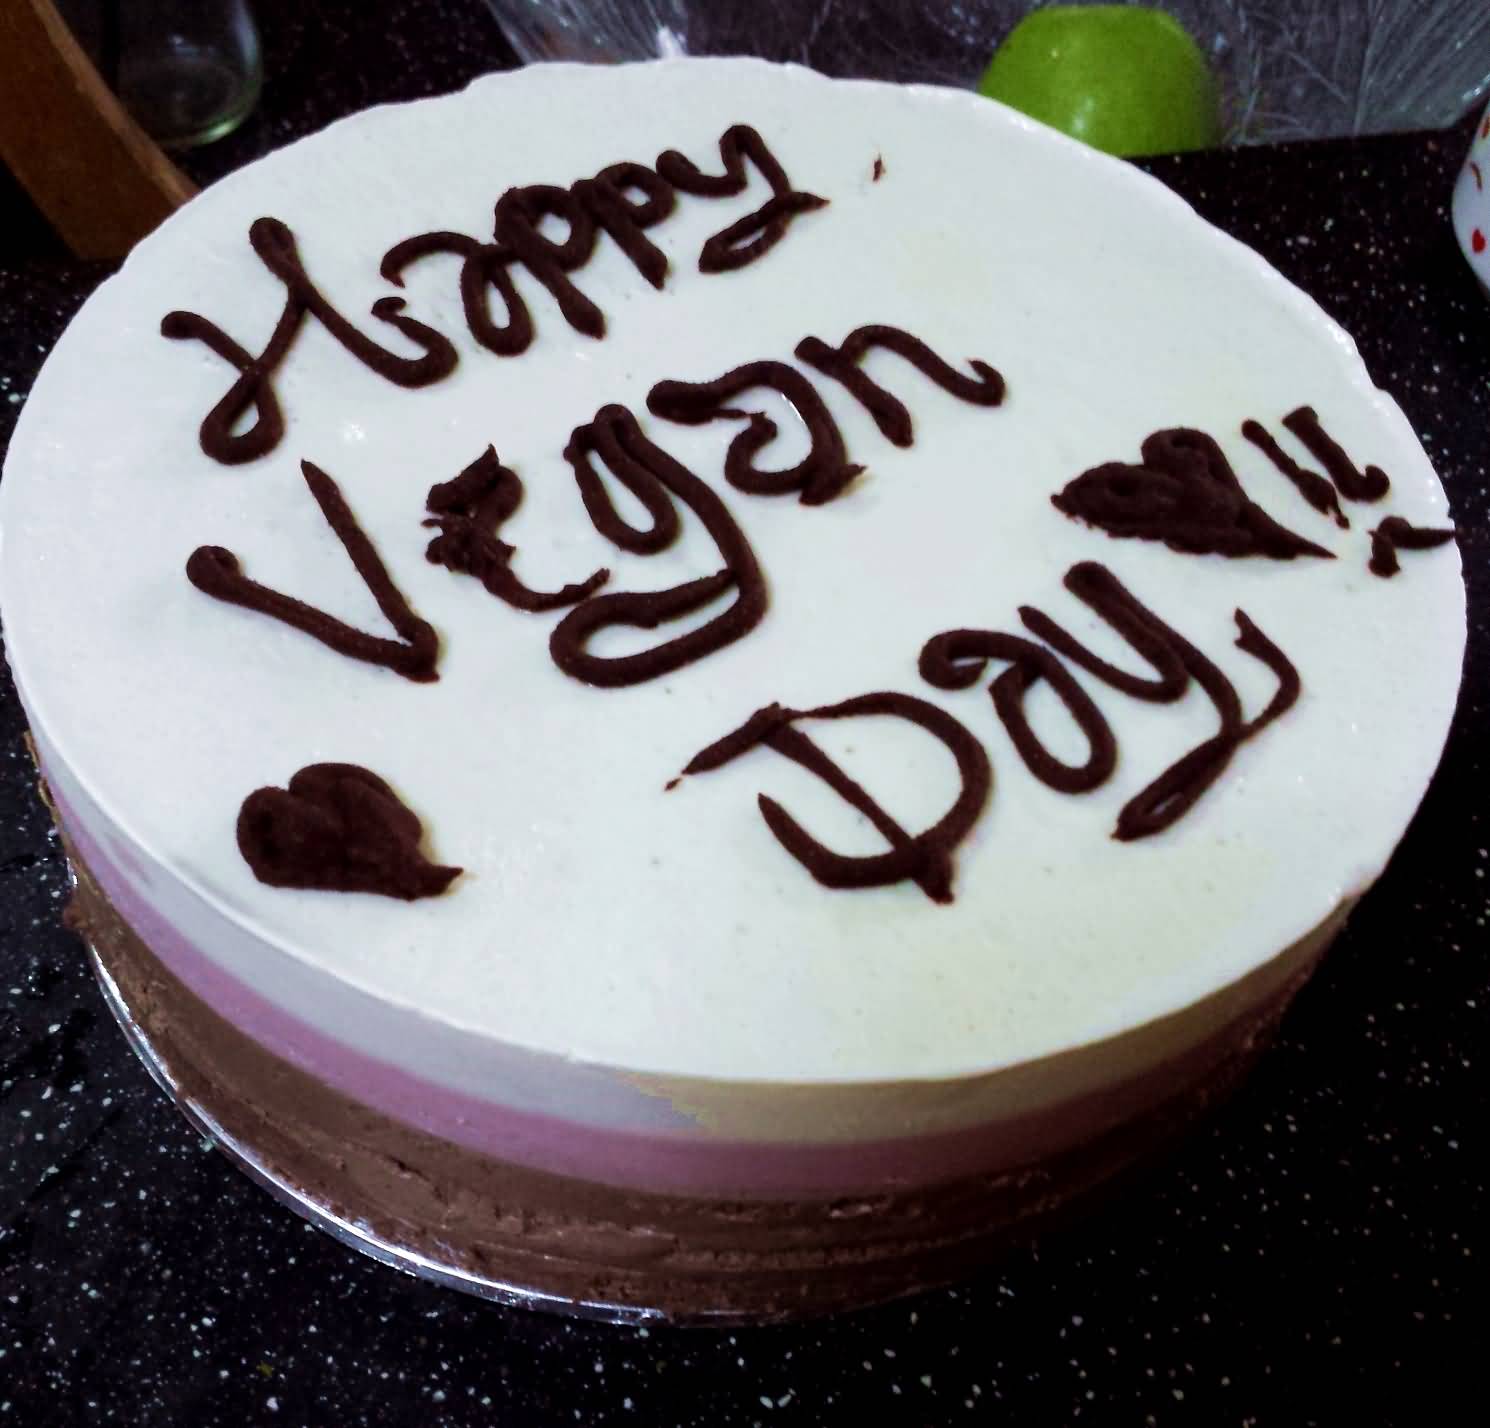 Happy Vegan Day Cake Picture